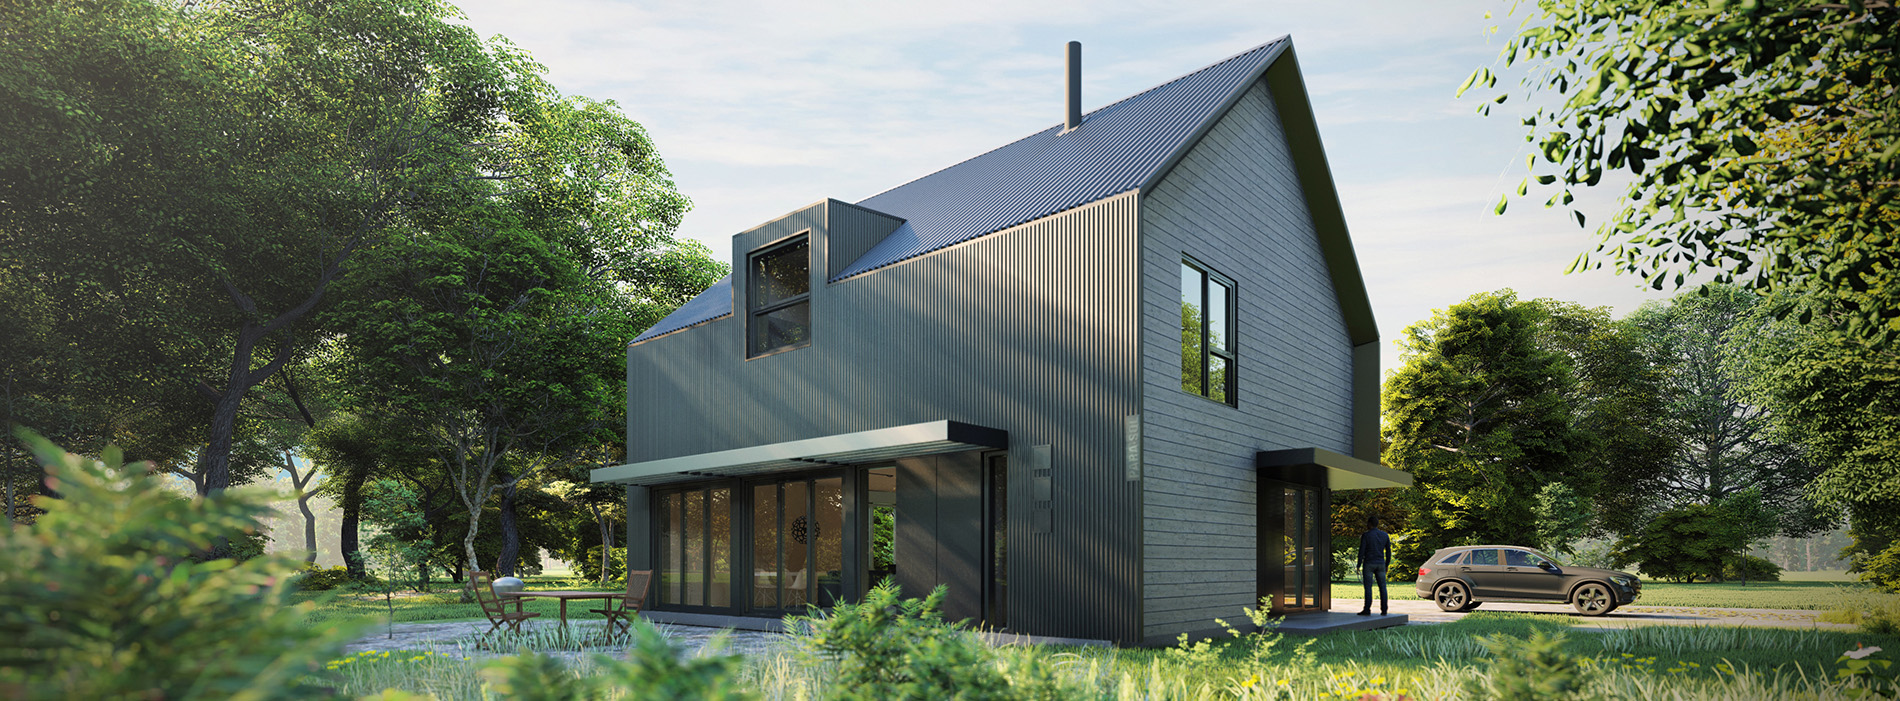 Formica Canada partners with Eco Home, Eco Home model kit, prefabricated architect designed ecologibal house, Eco Habitat S1600